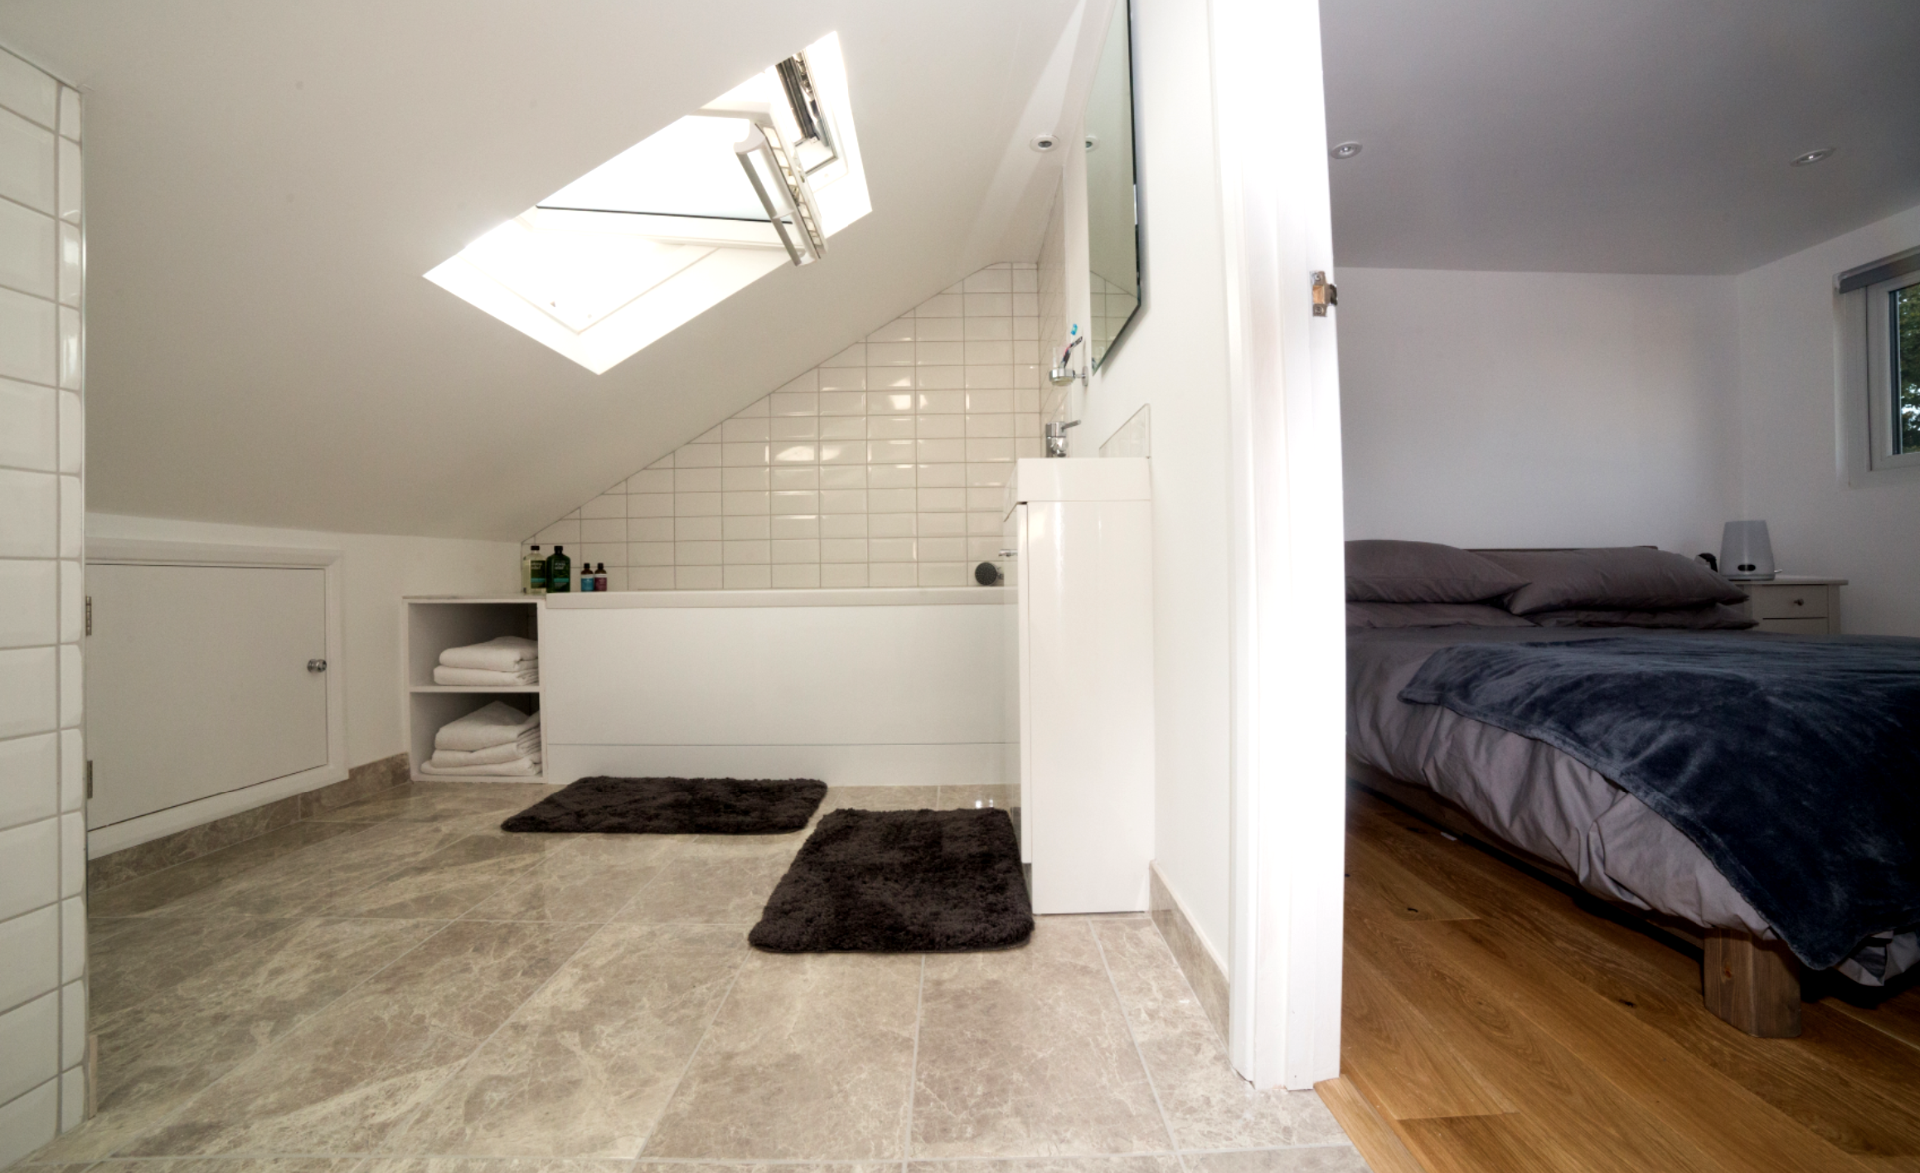 Bedroom and ensuite bathroom loft conversion in Maidenhead